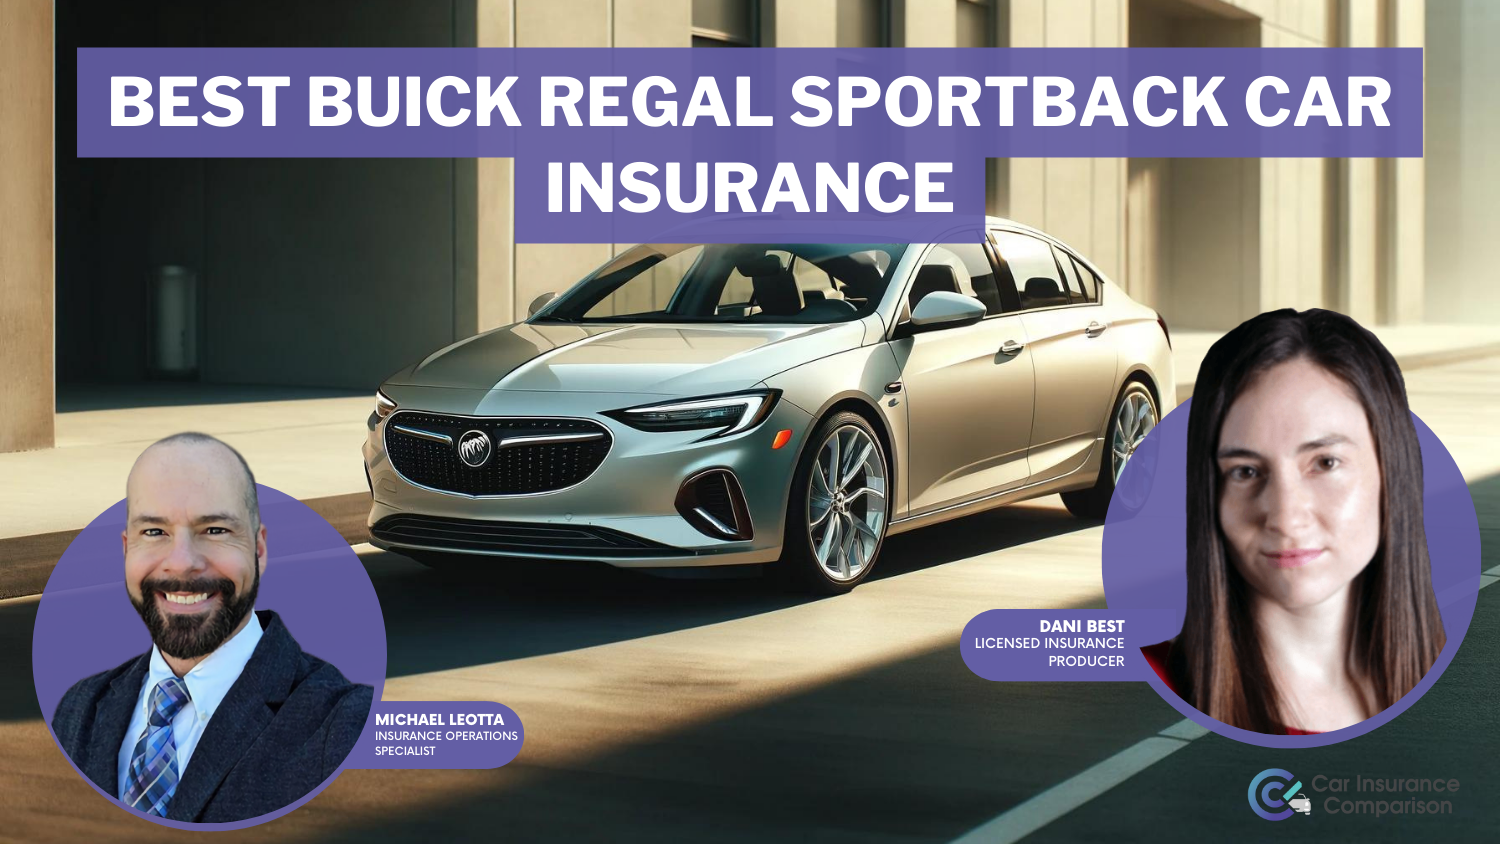 Best Buick Regal Sportback Car Insurance: State Farm, Progressive, and Liberty Mutual